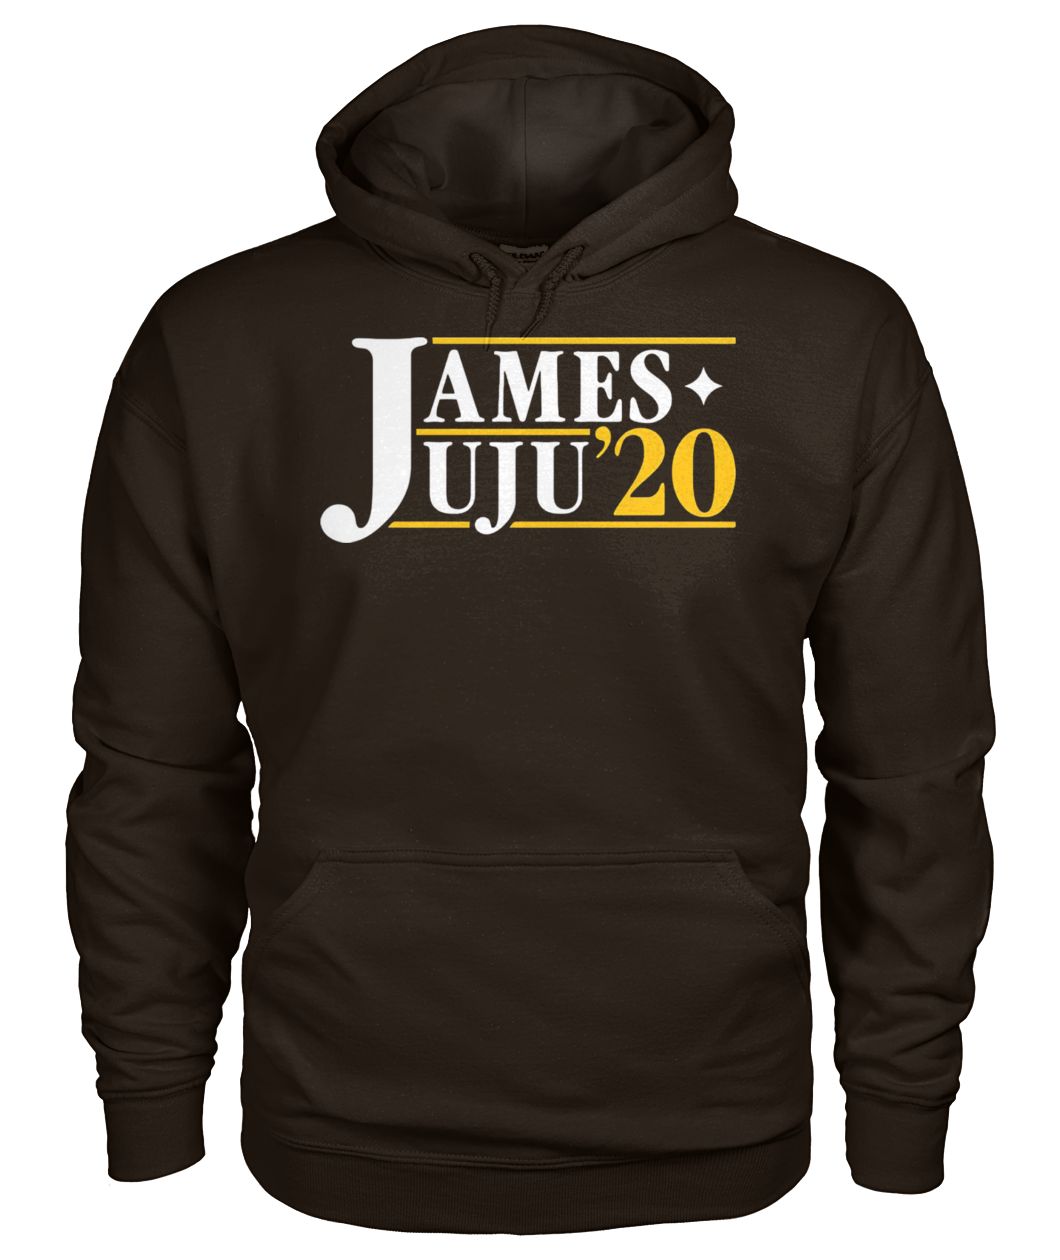 James juju for president 2020 gildan hoodie